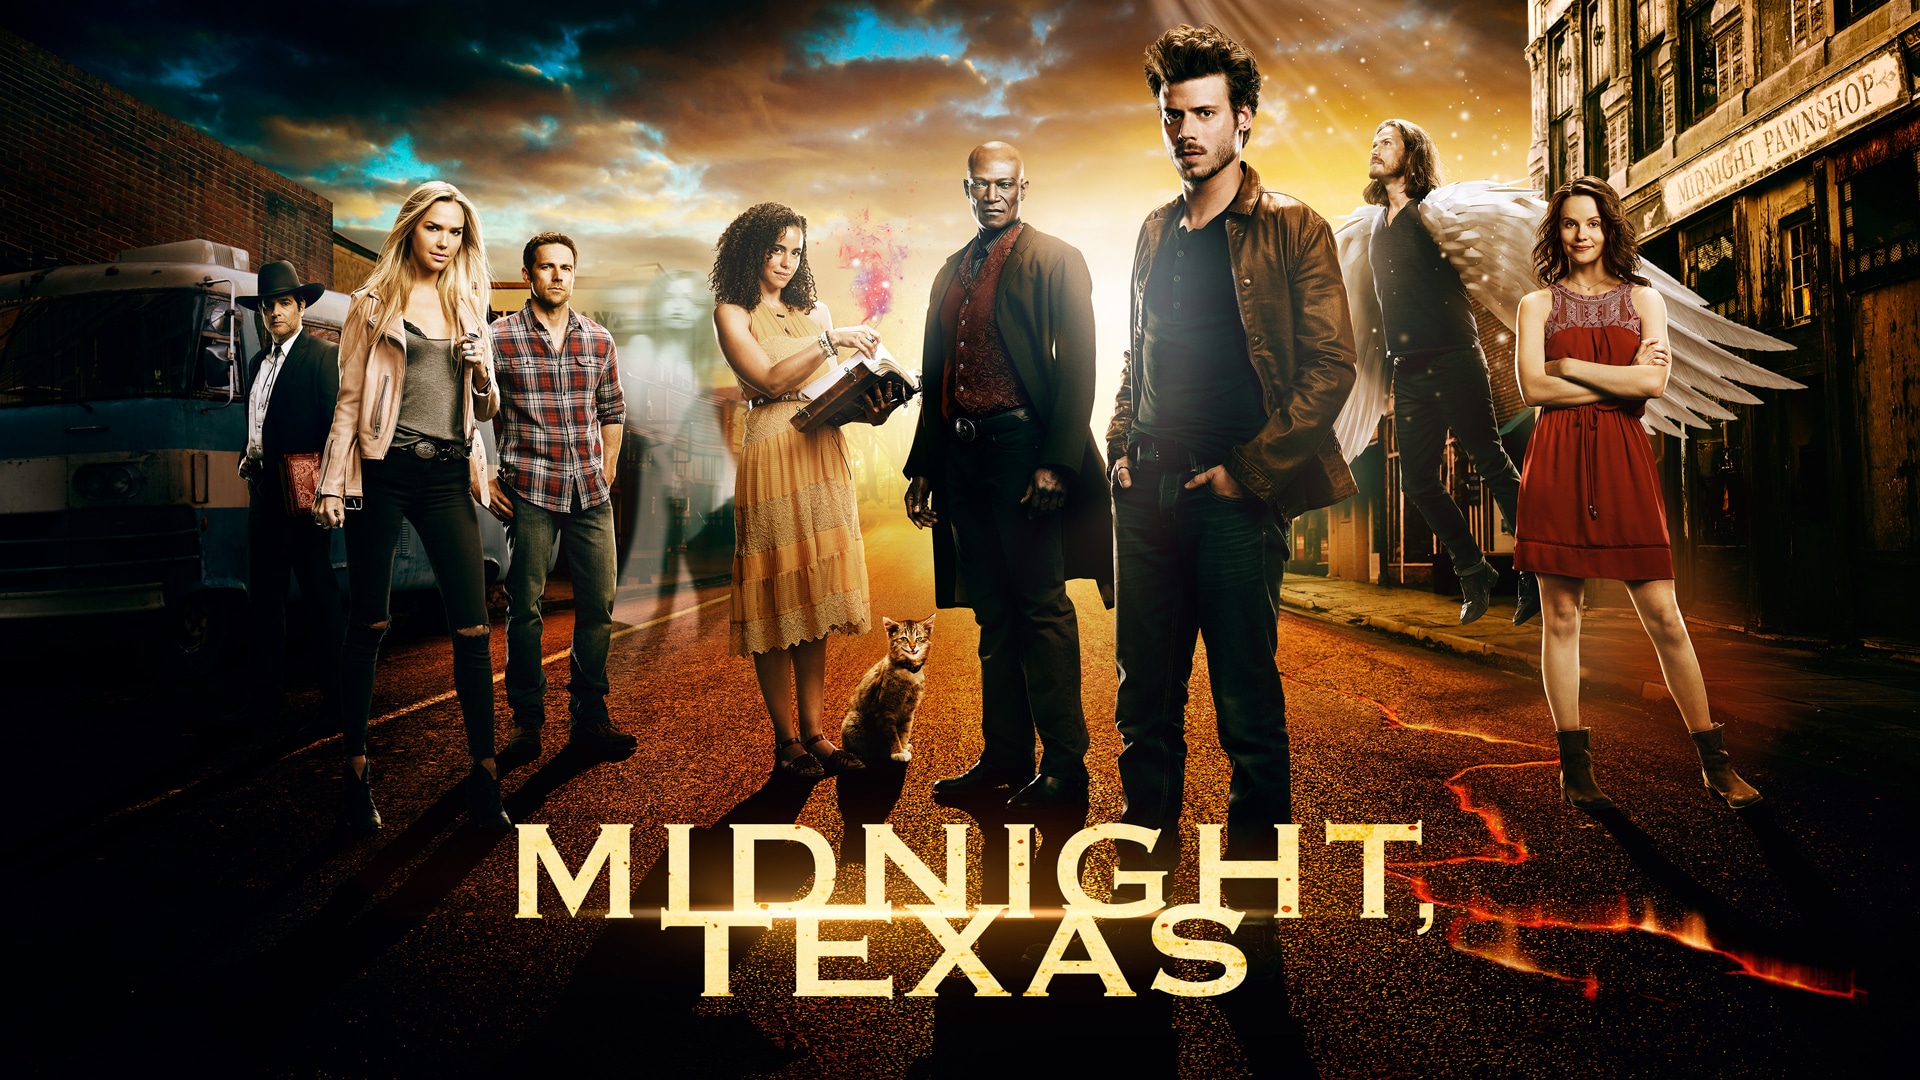 Midnight, Texas Cast - NBC.com1920 x 1080